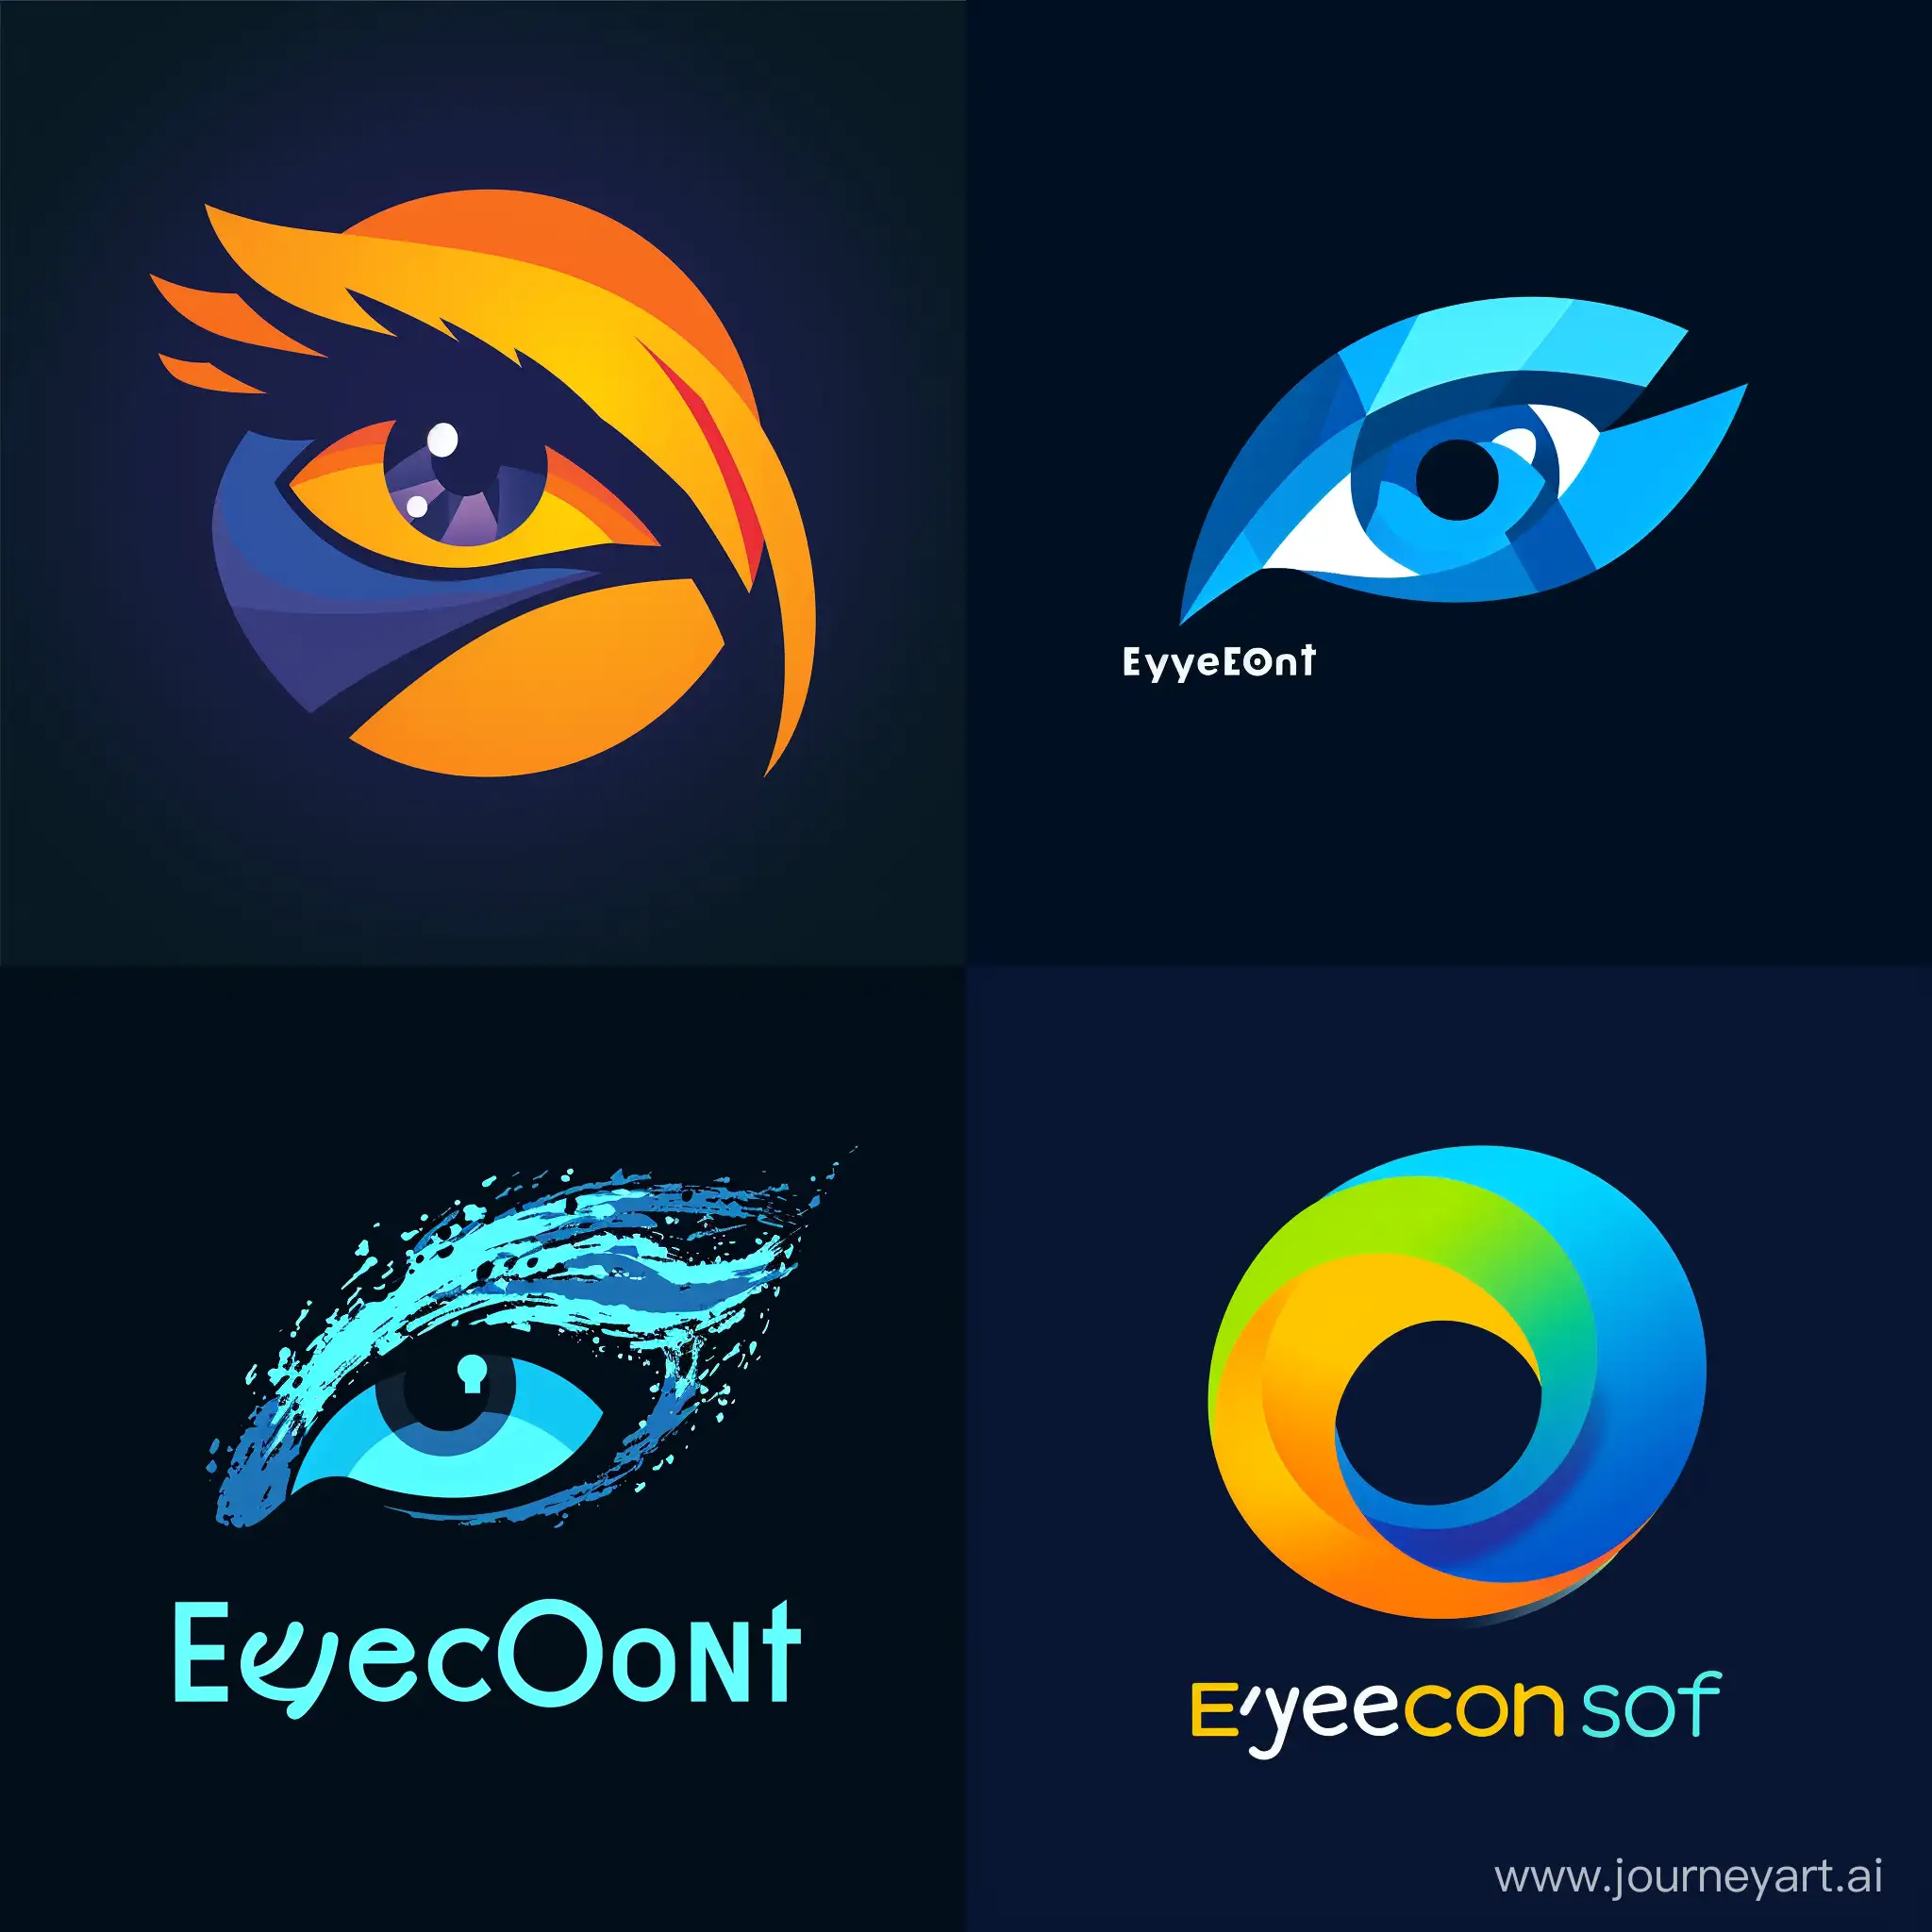 Make a logo for my company "Eyeconsoft"